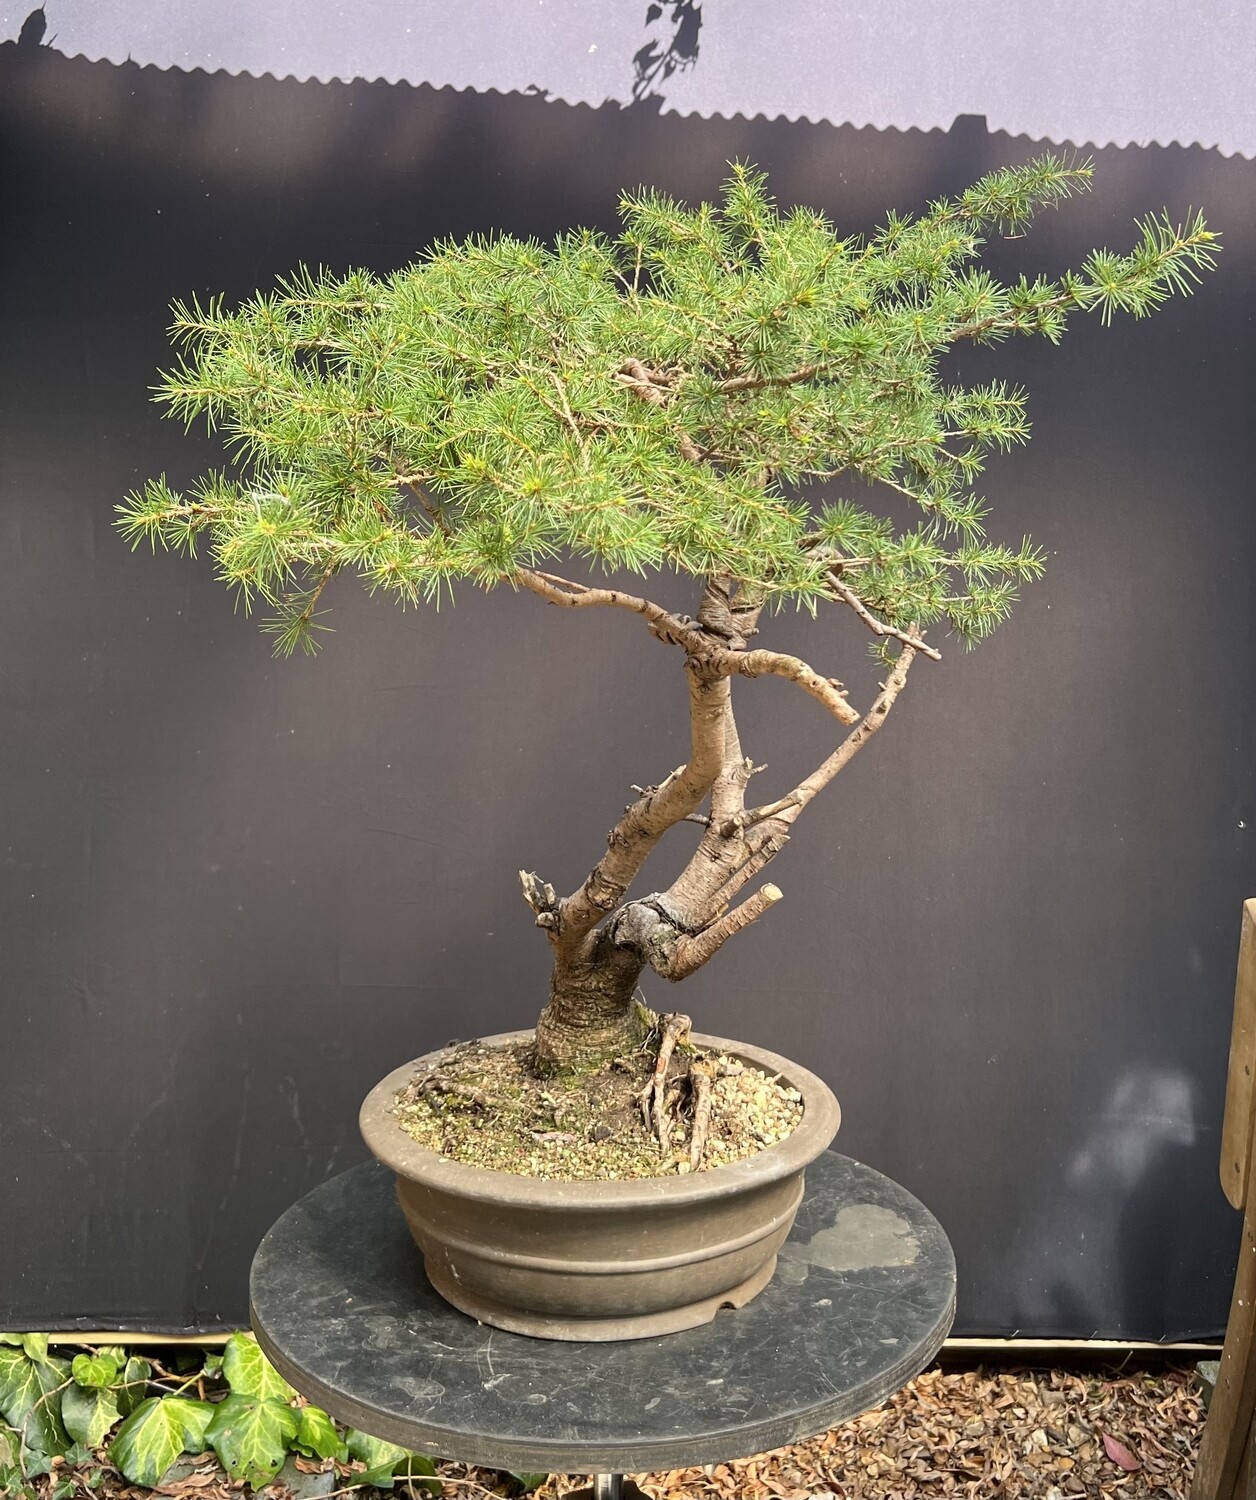 Cedrus libani/Cedar of Lebanon bonsai Withdrawn For Styling